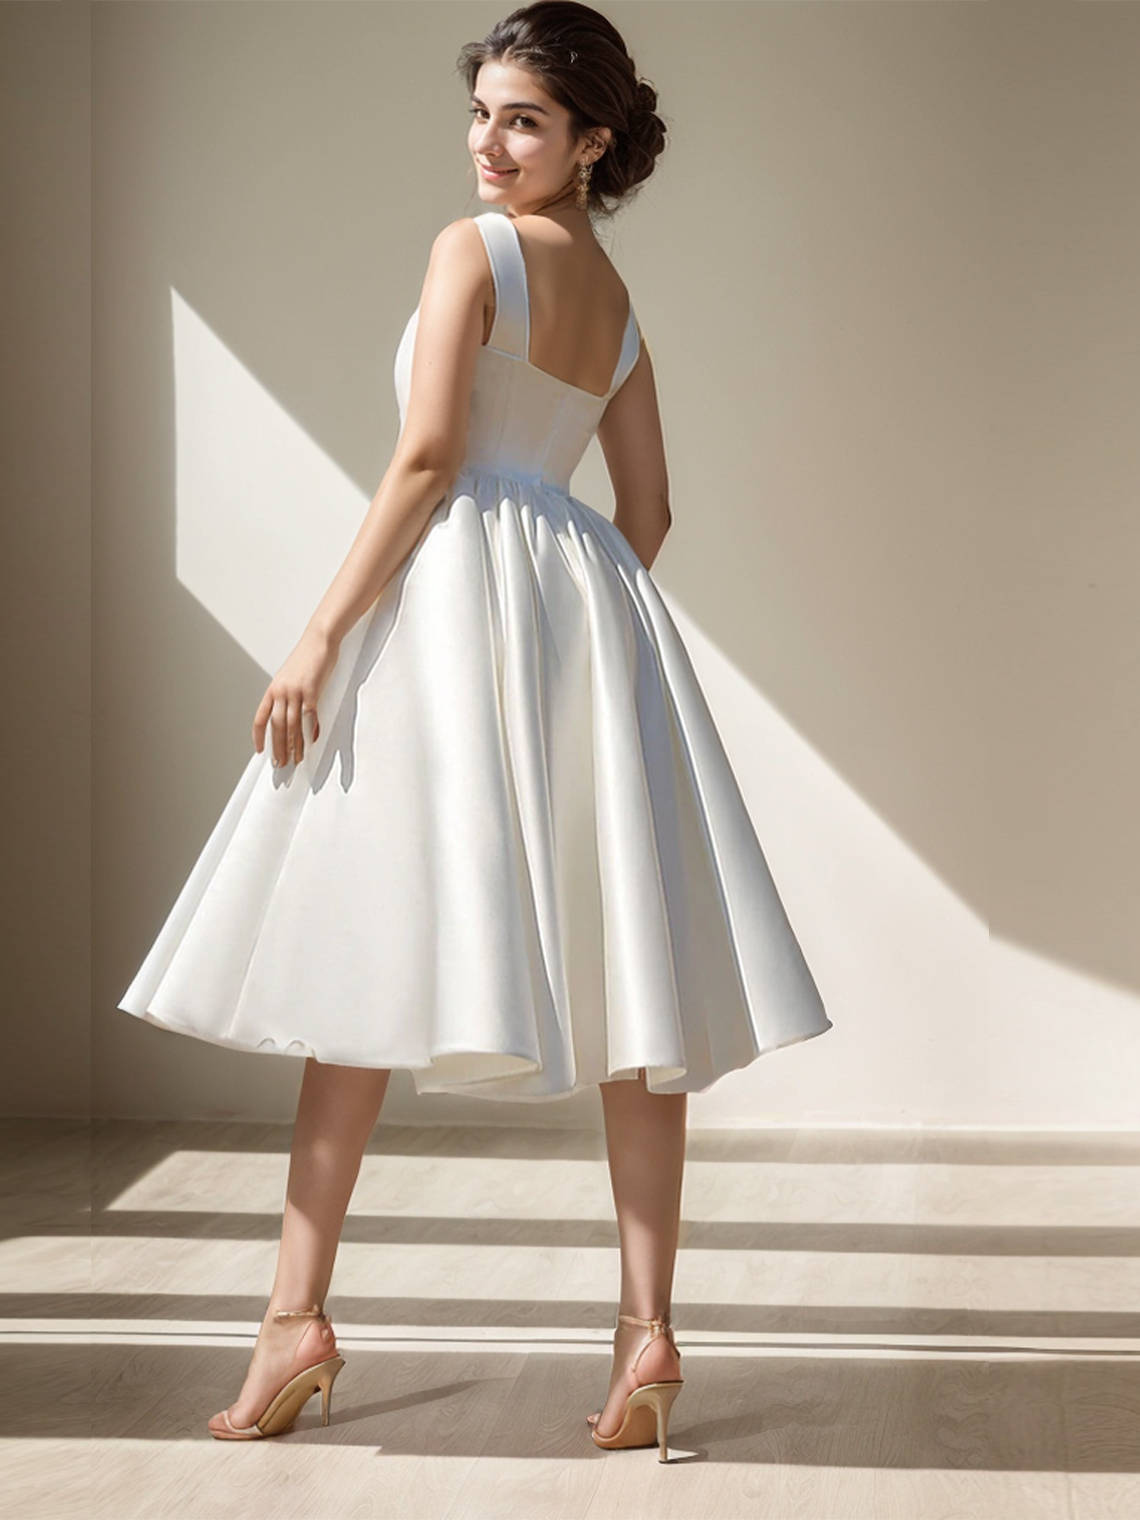 A-Line Homecoming Minimalist Tea Length with Sleek Cocktail Dresses